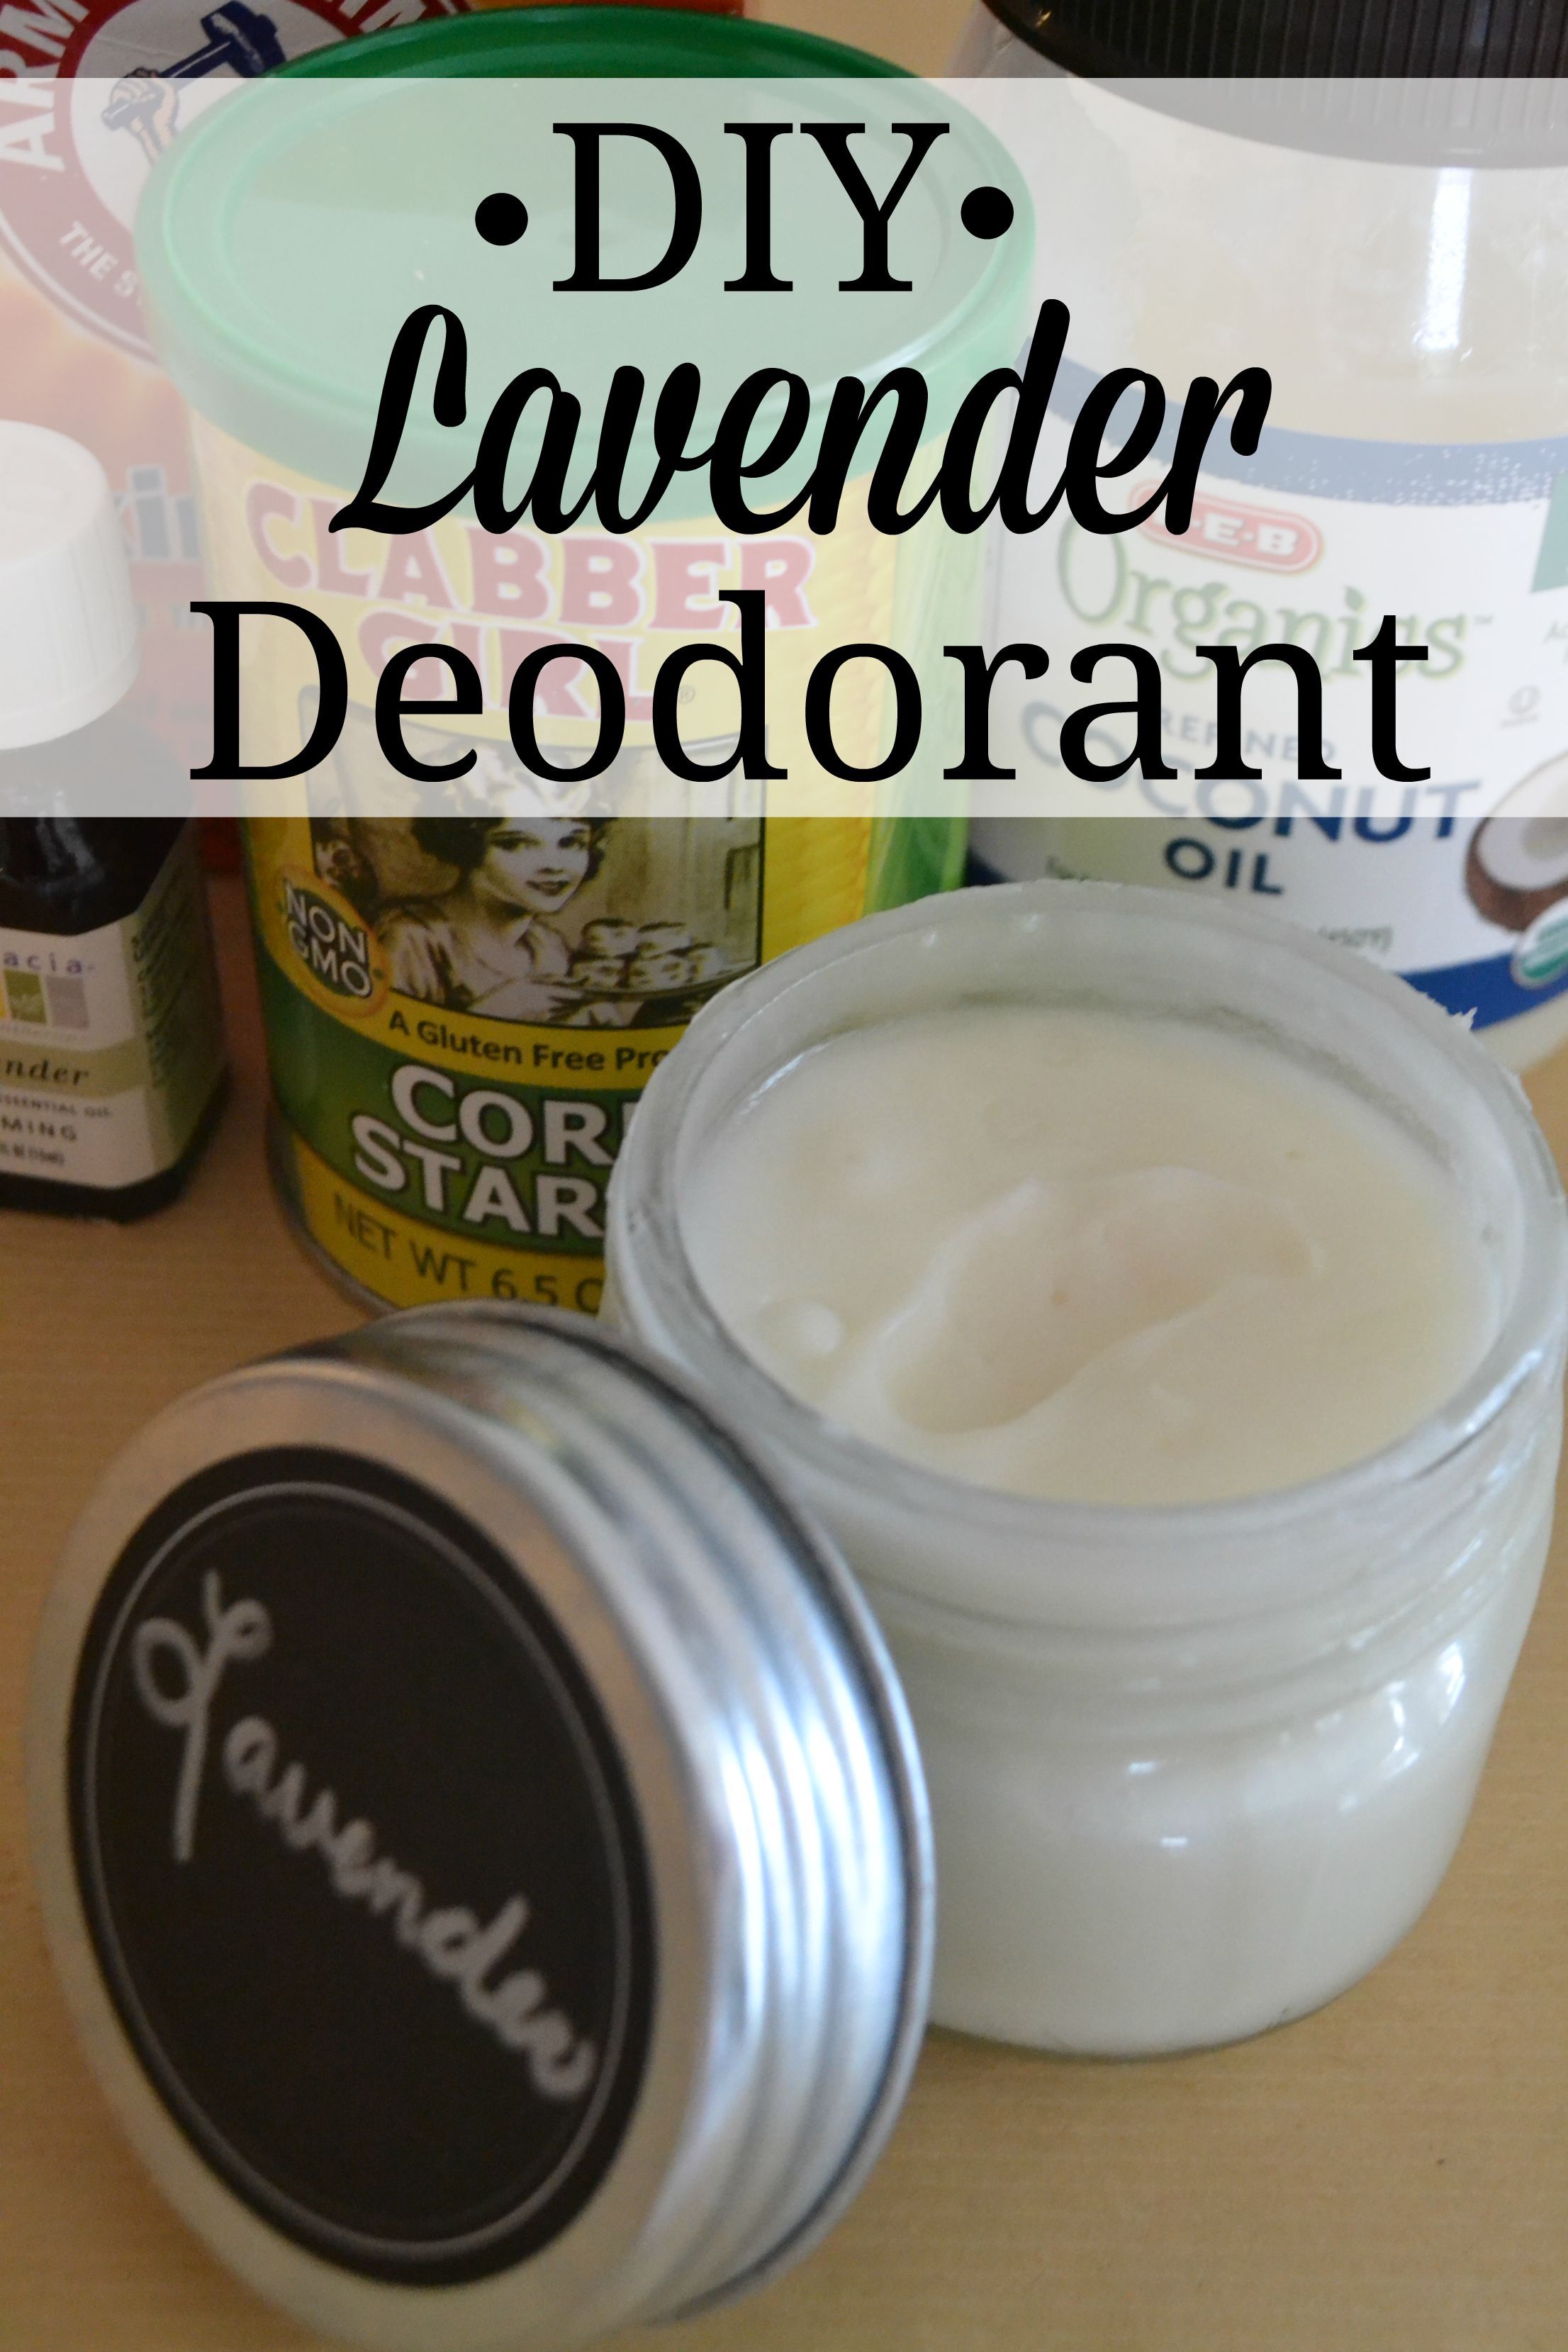 DIY Lavender Deodorant